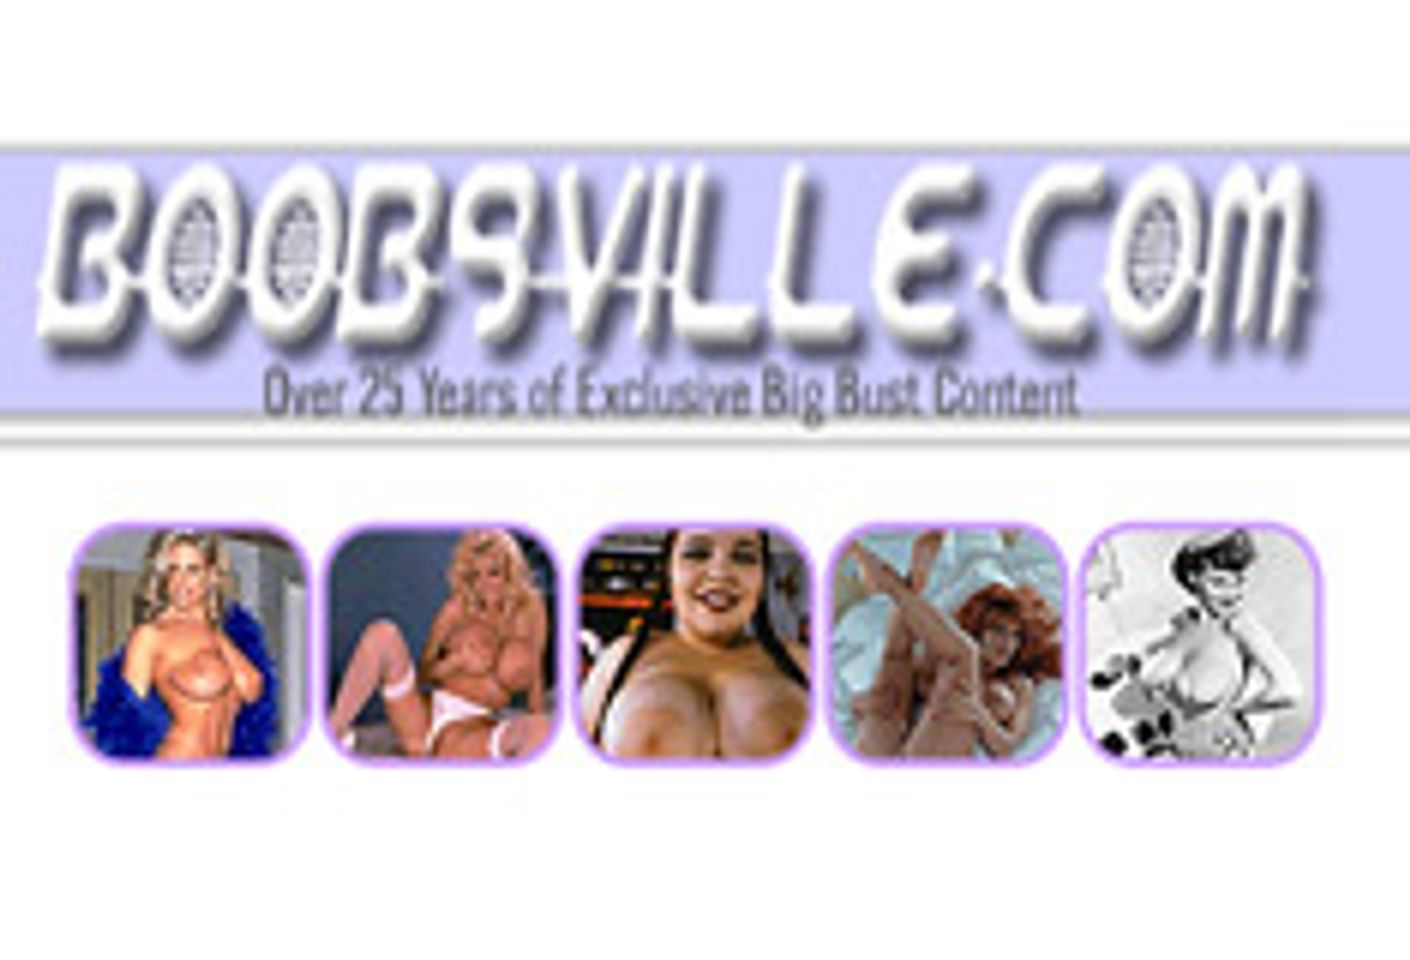 Boobsville.com Gets An Implant